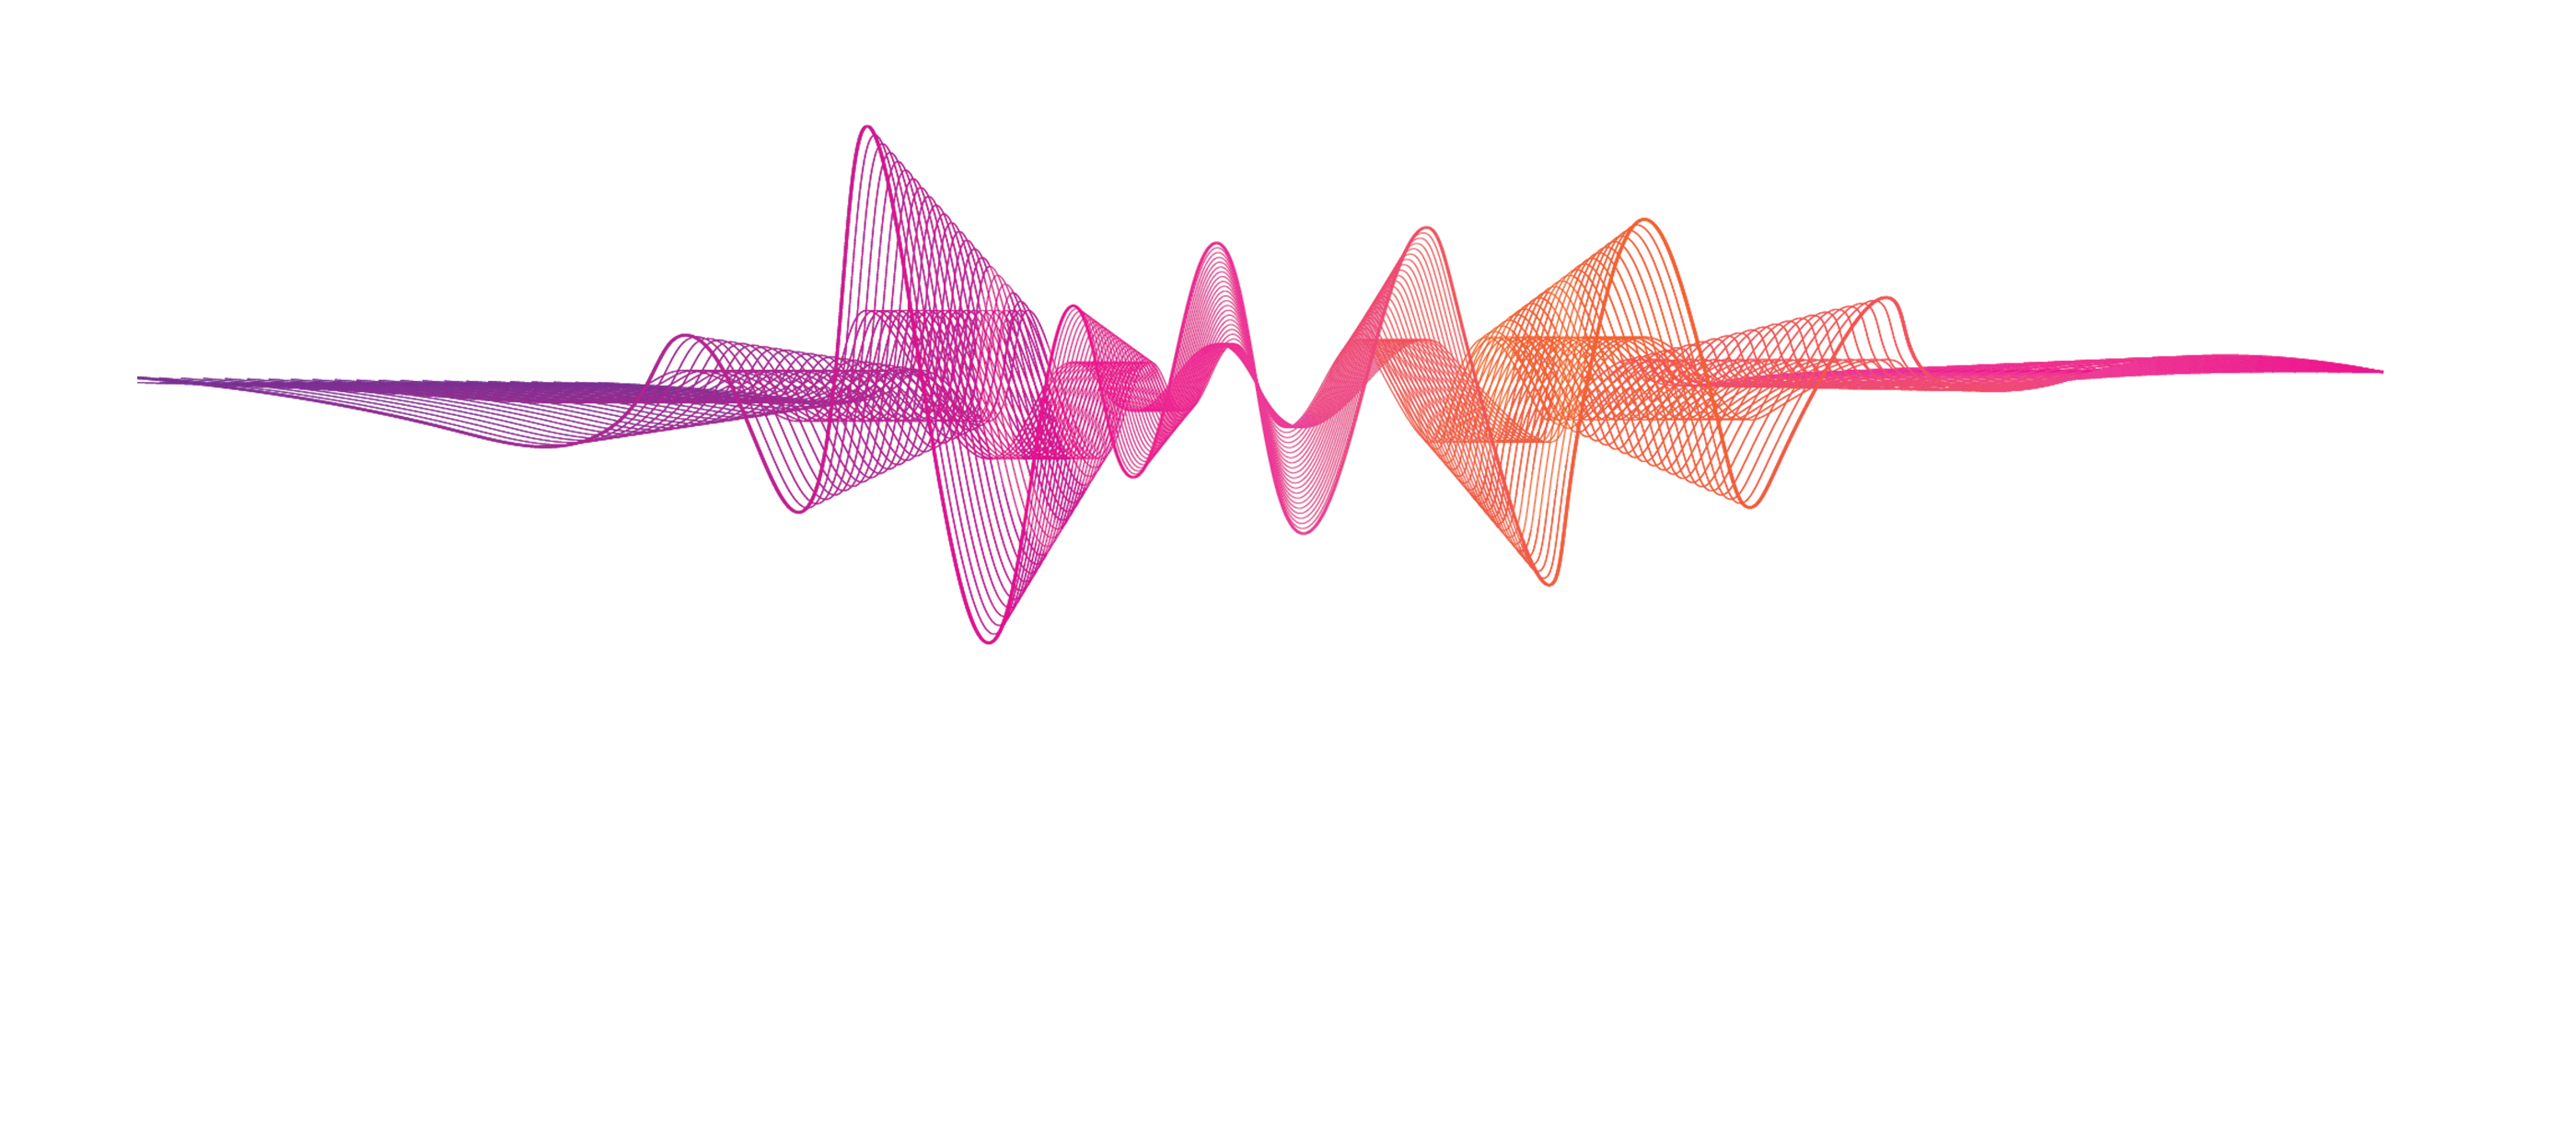 Matrix_logo